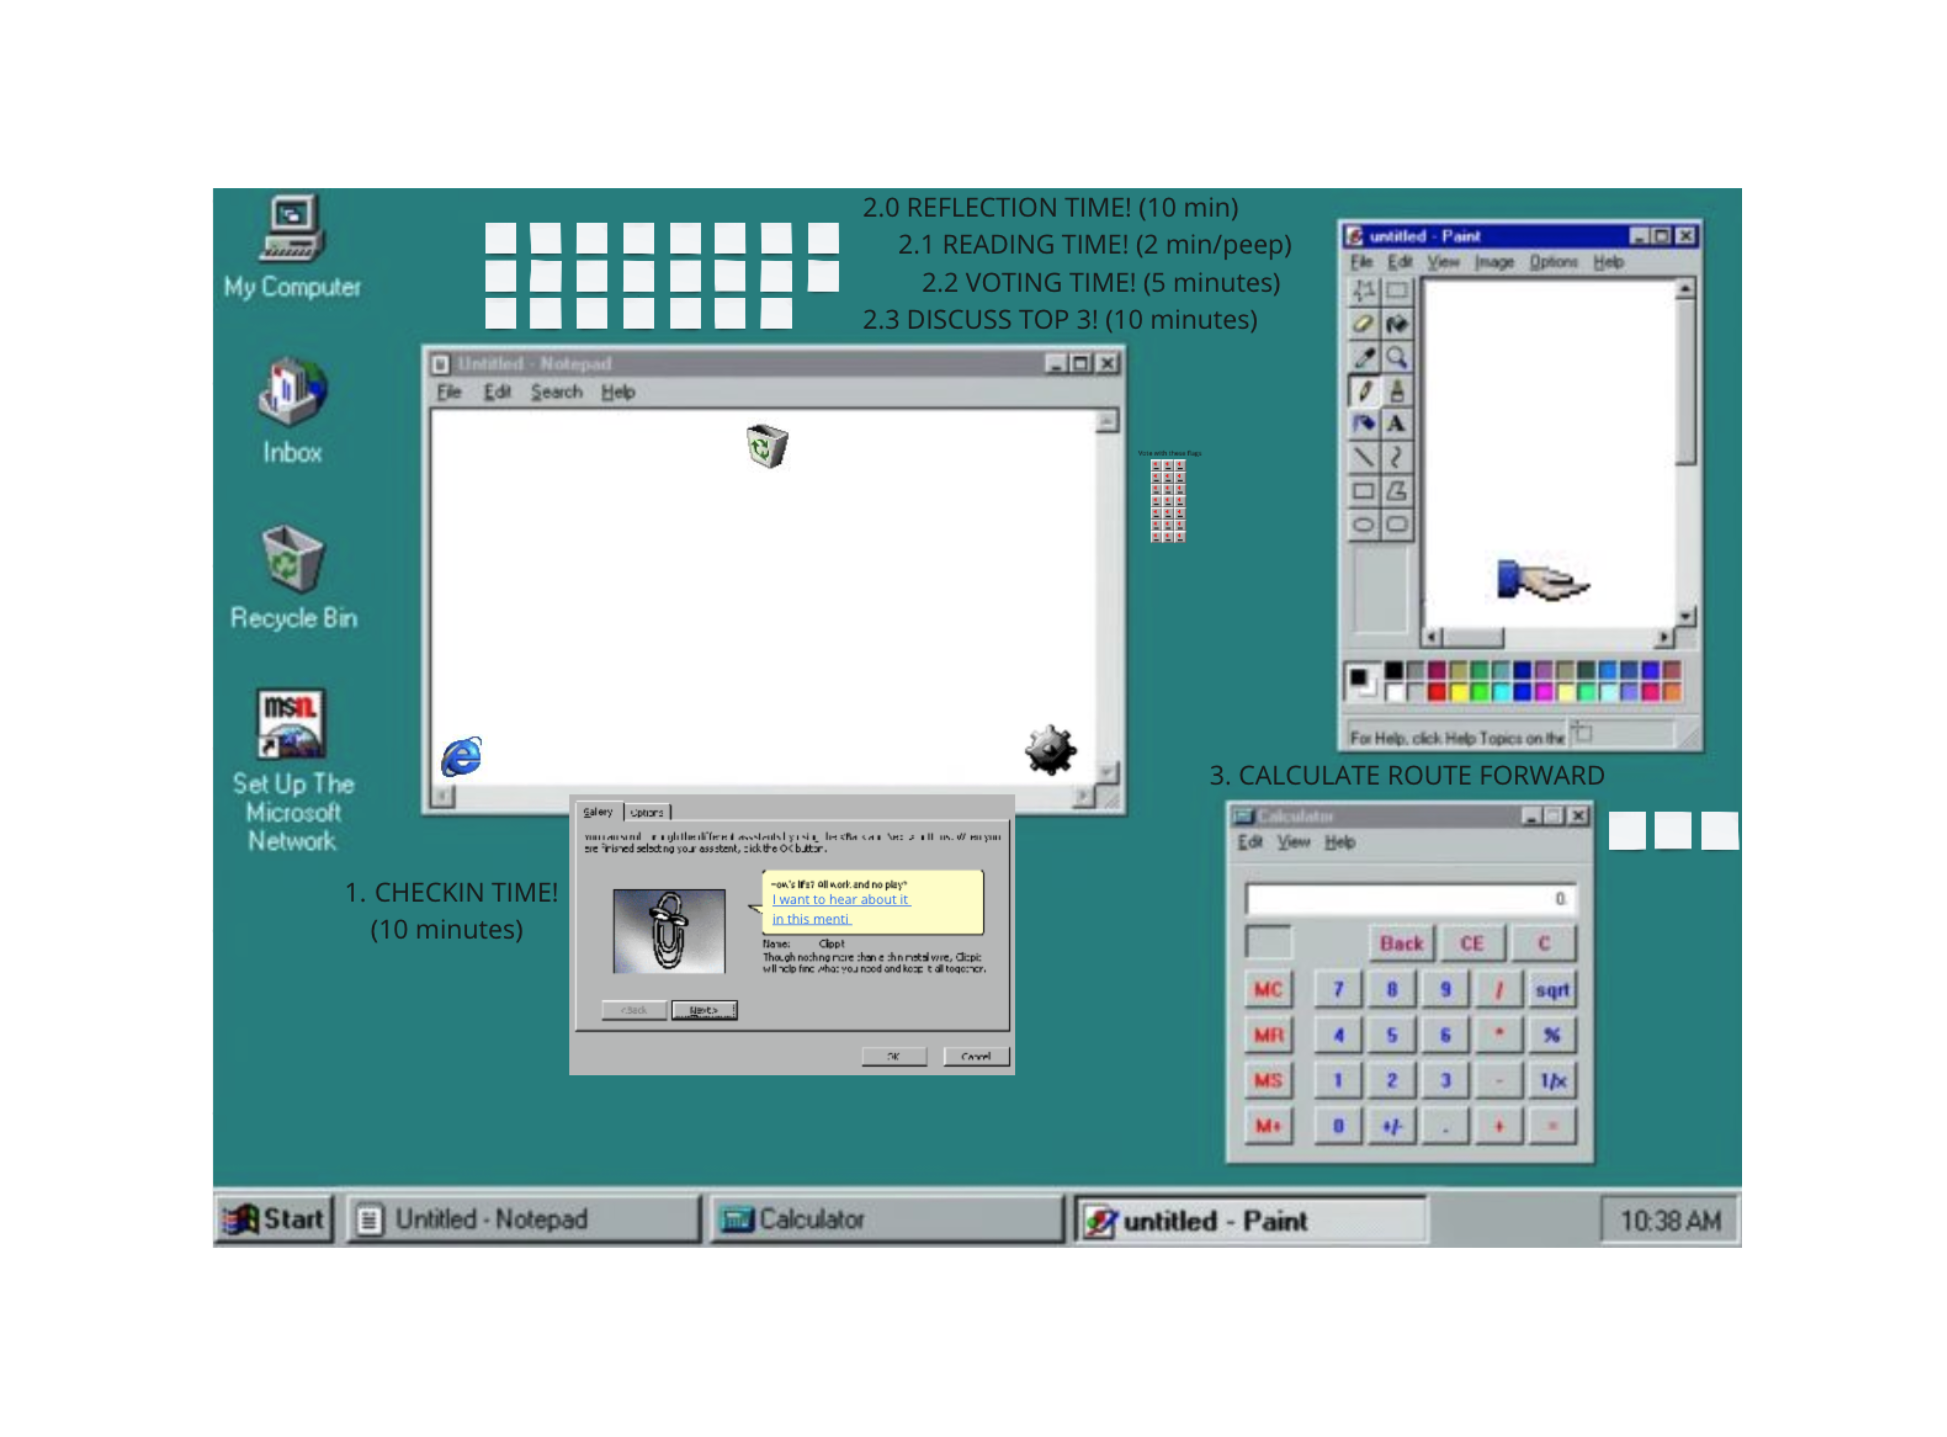 Anton's Windows 95 Retro